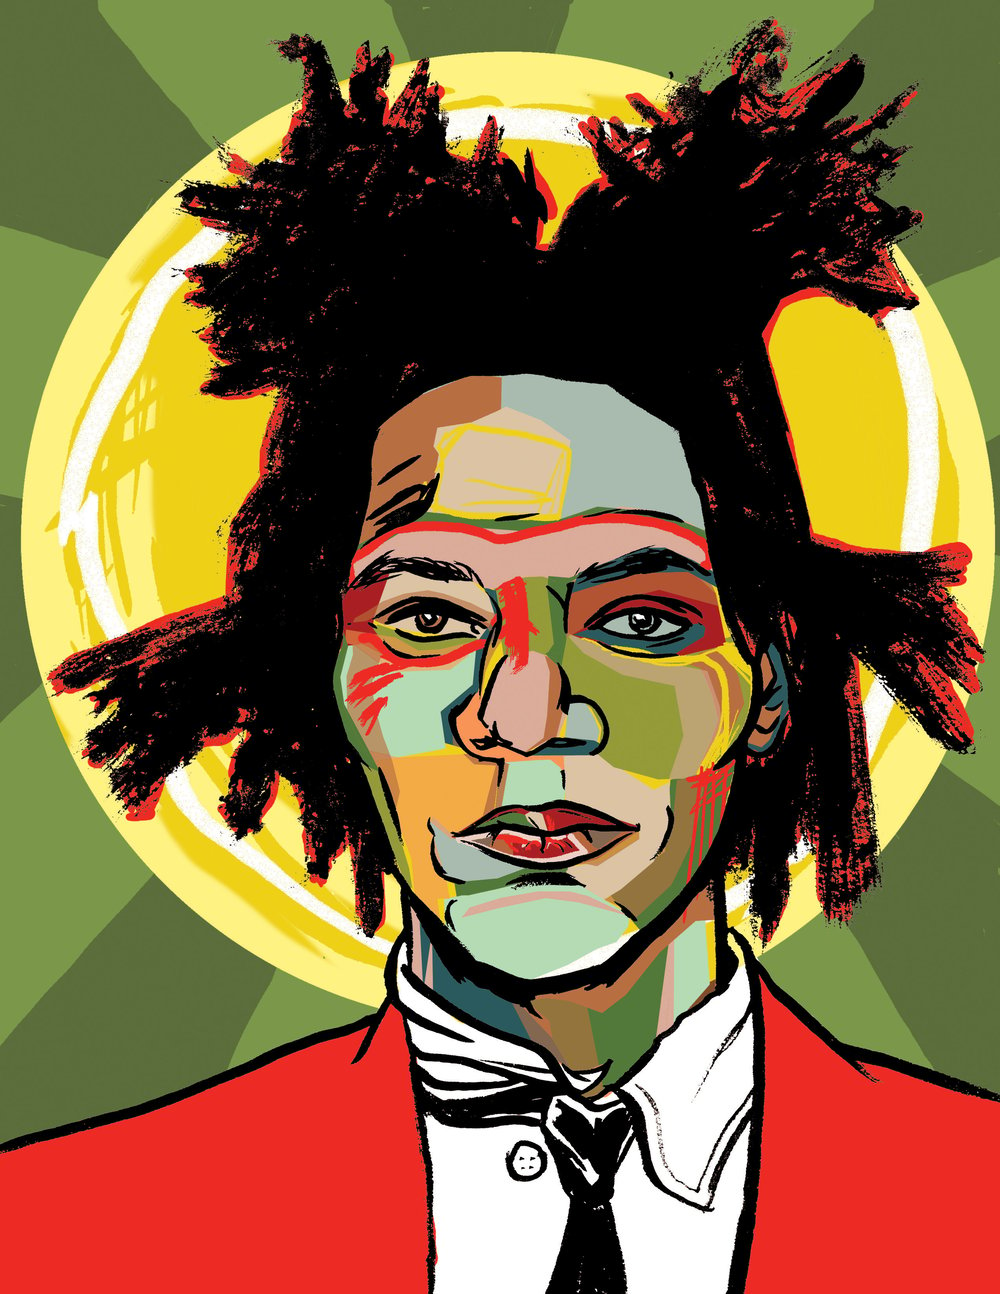 Basquiat Mug